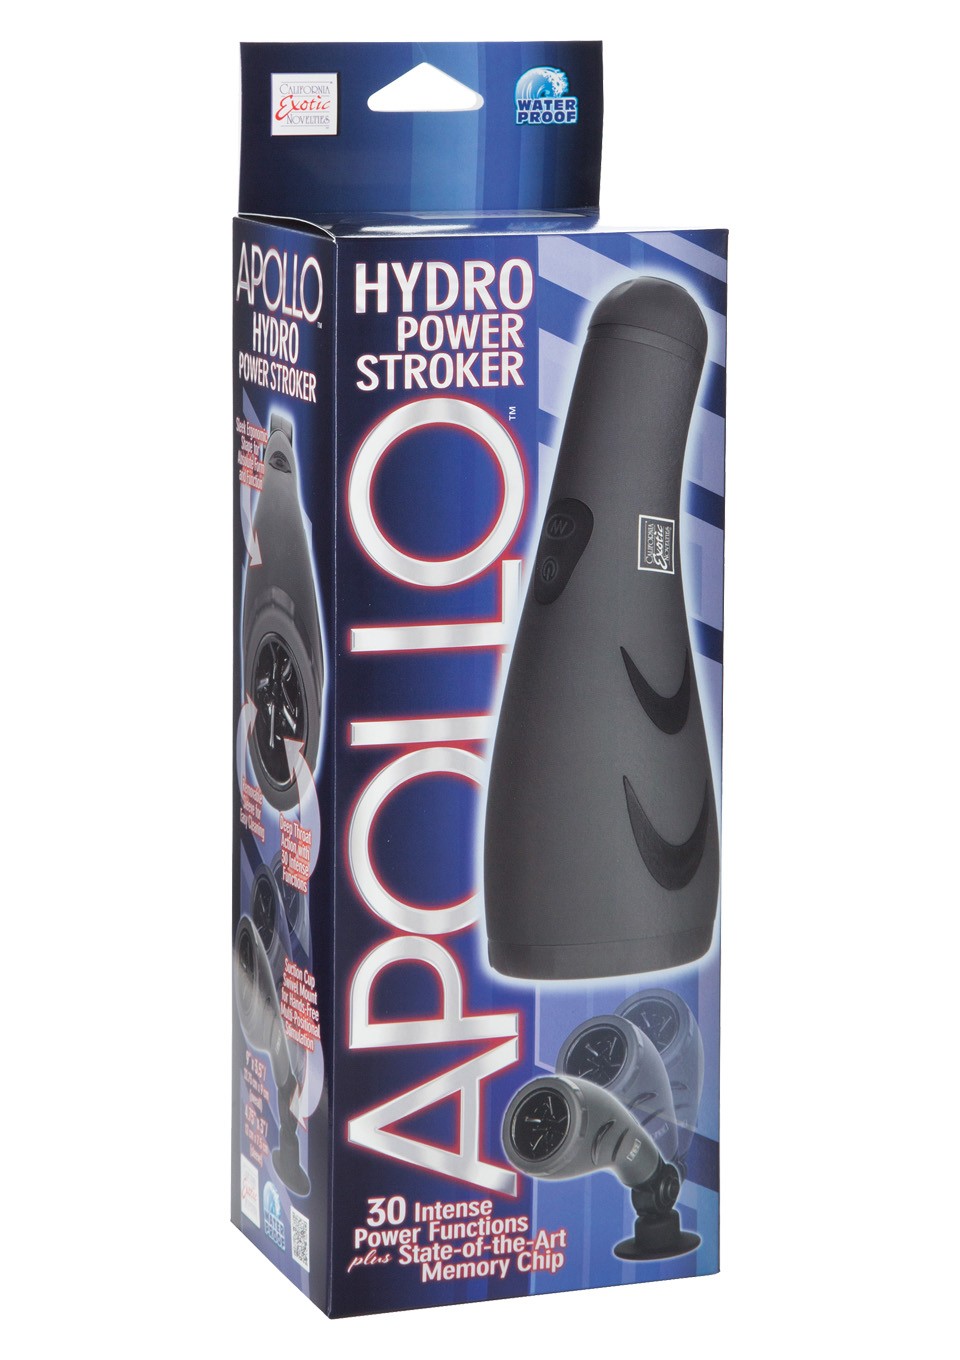 Hydro Power Stroker Apollo